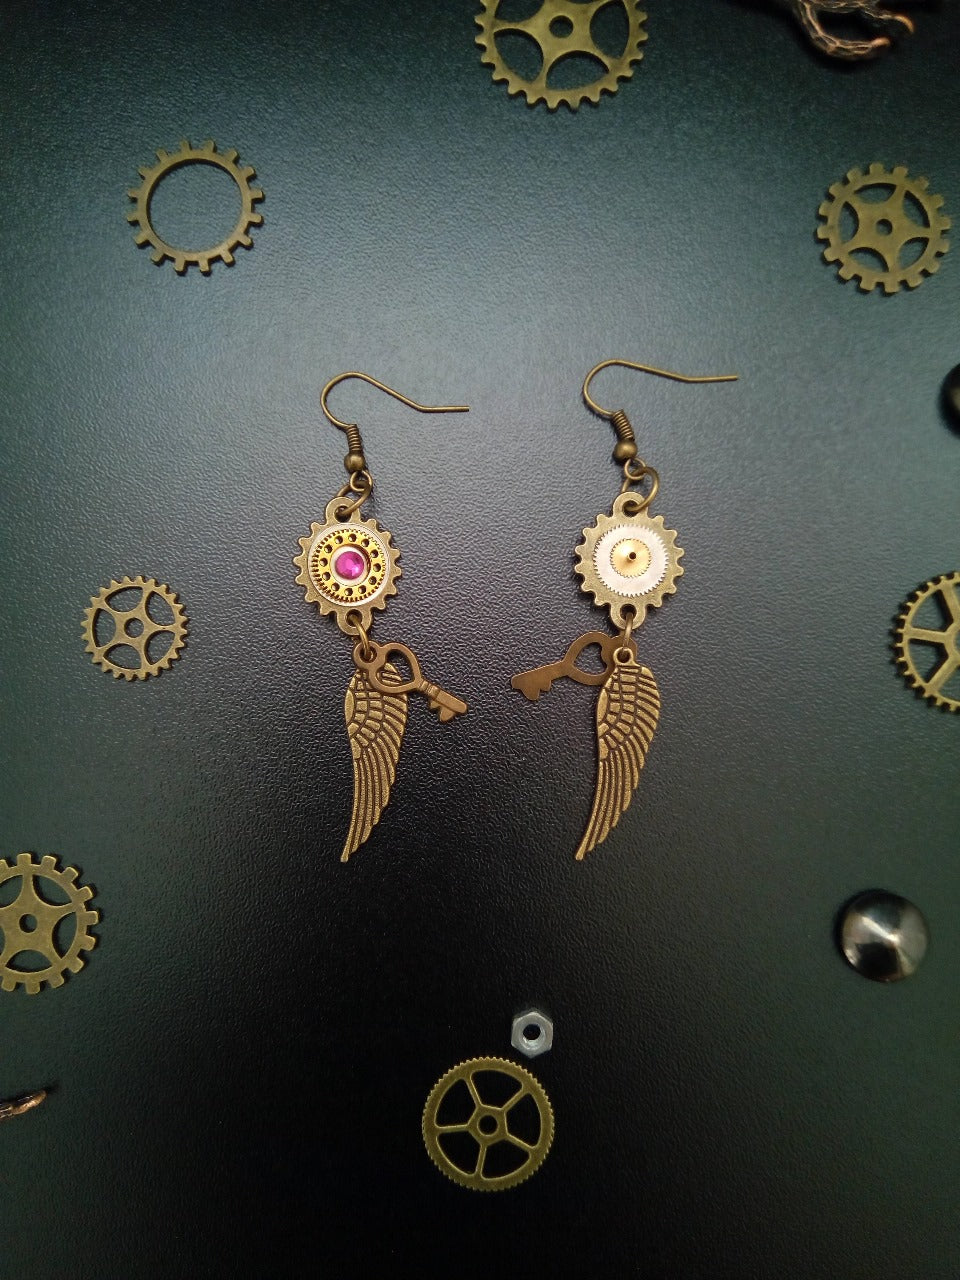 Steampunk earrings. Exclusive Steampunk Jewelry. Handmade